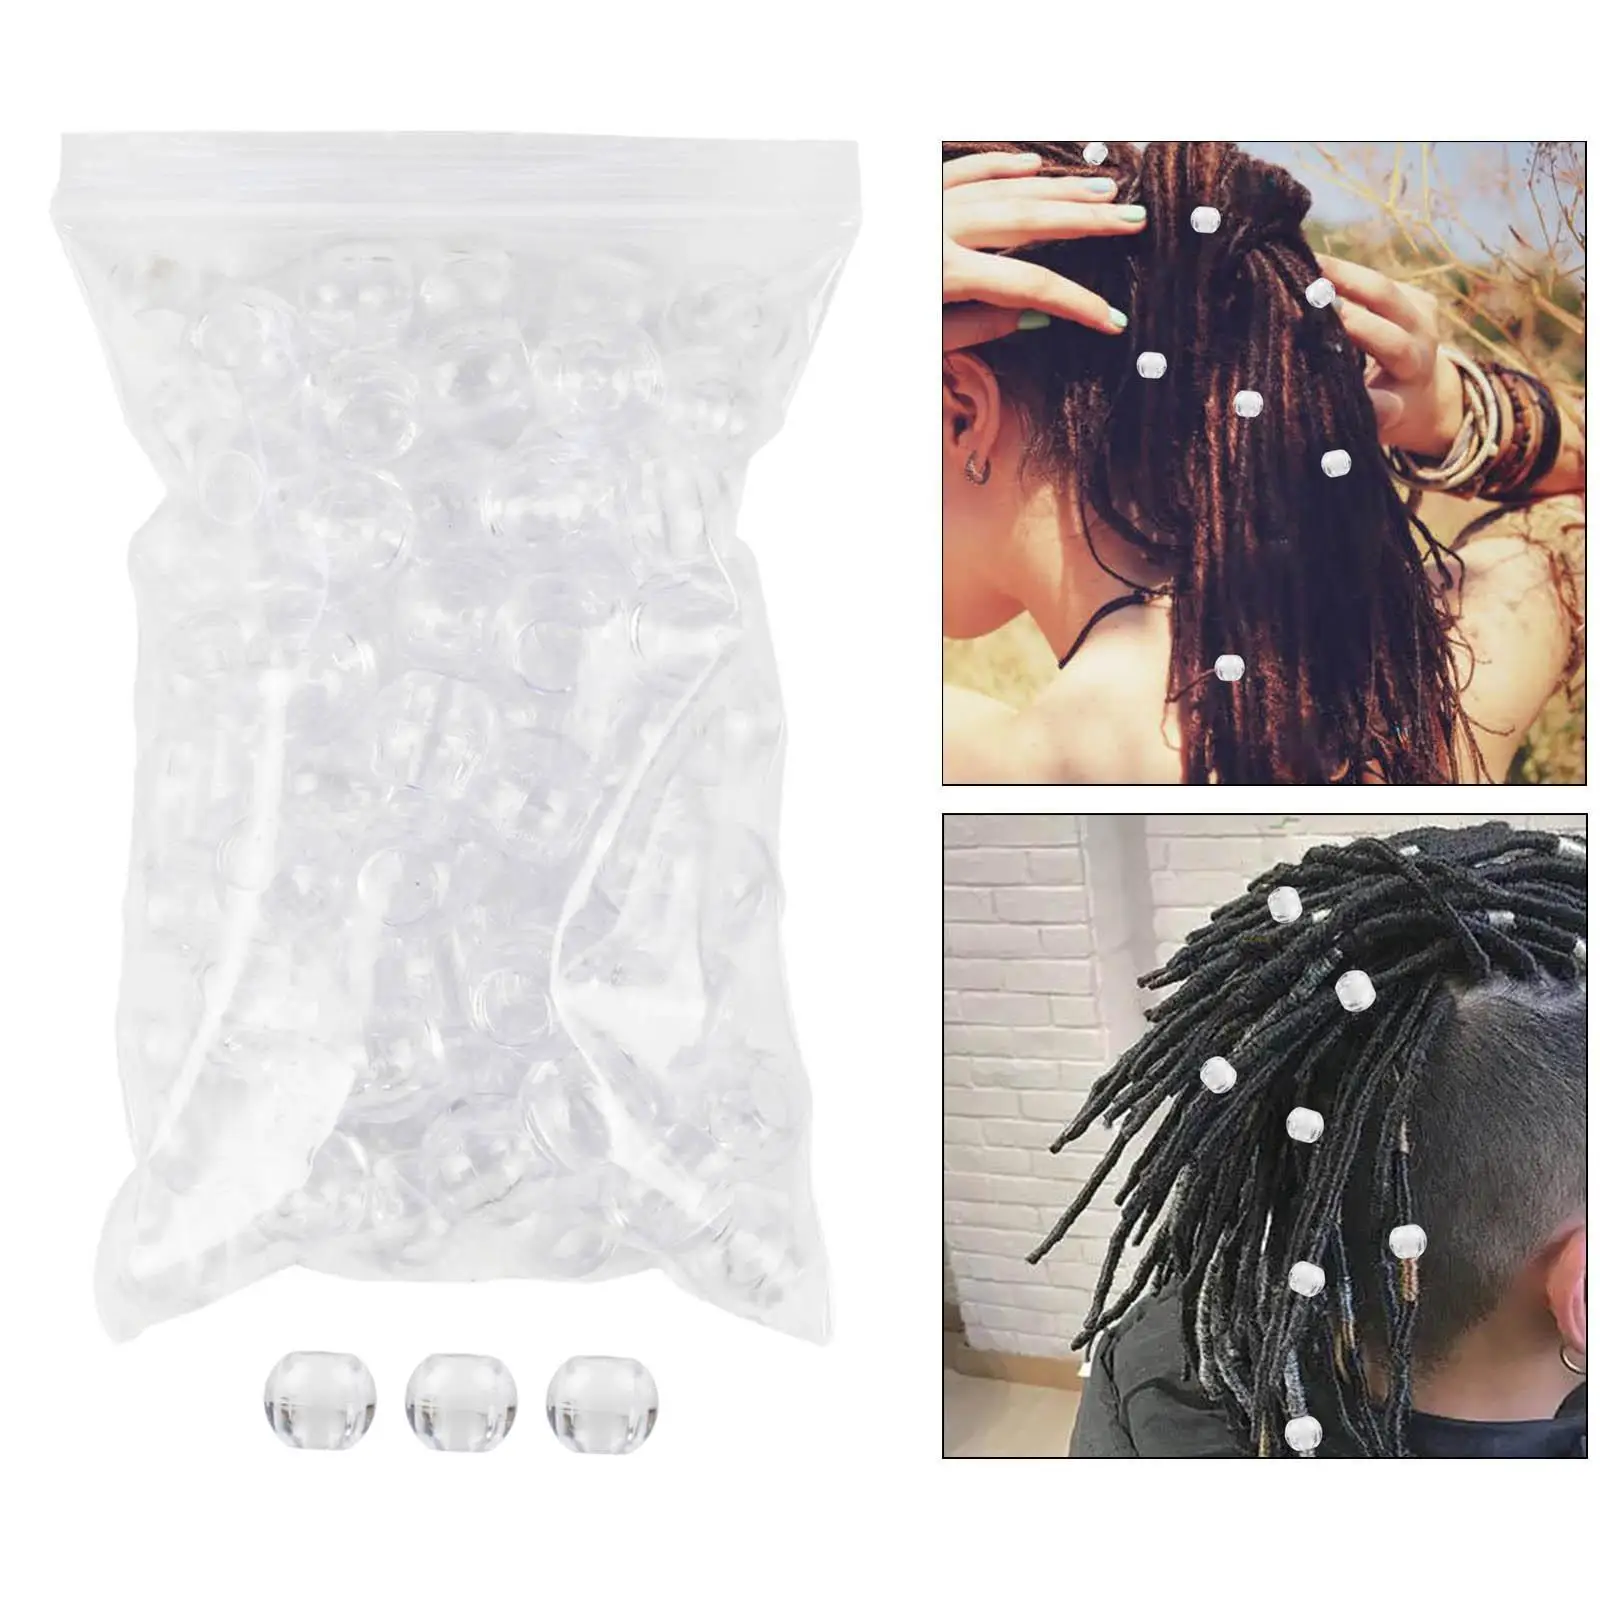 100 Pieces Dreadlock Beads 16mm Dia 8mm Hole Beauty Supplies Plastic Hair Bead for Dreadlock Wig Photography Adults Men Women